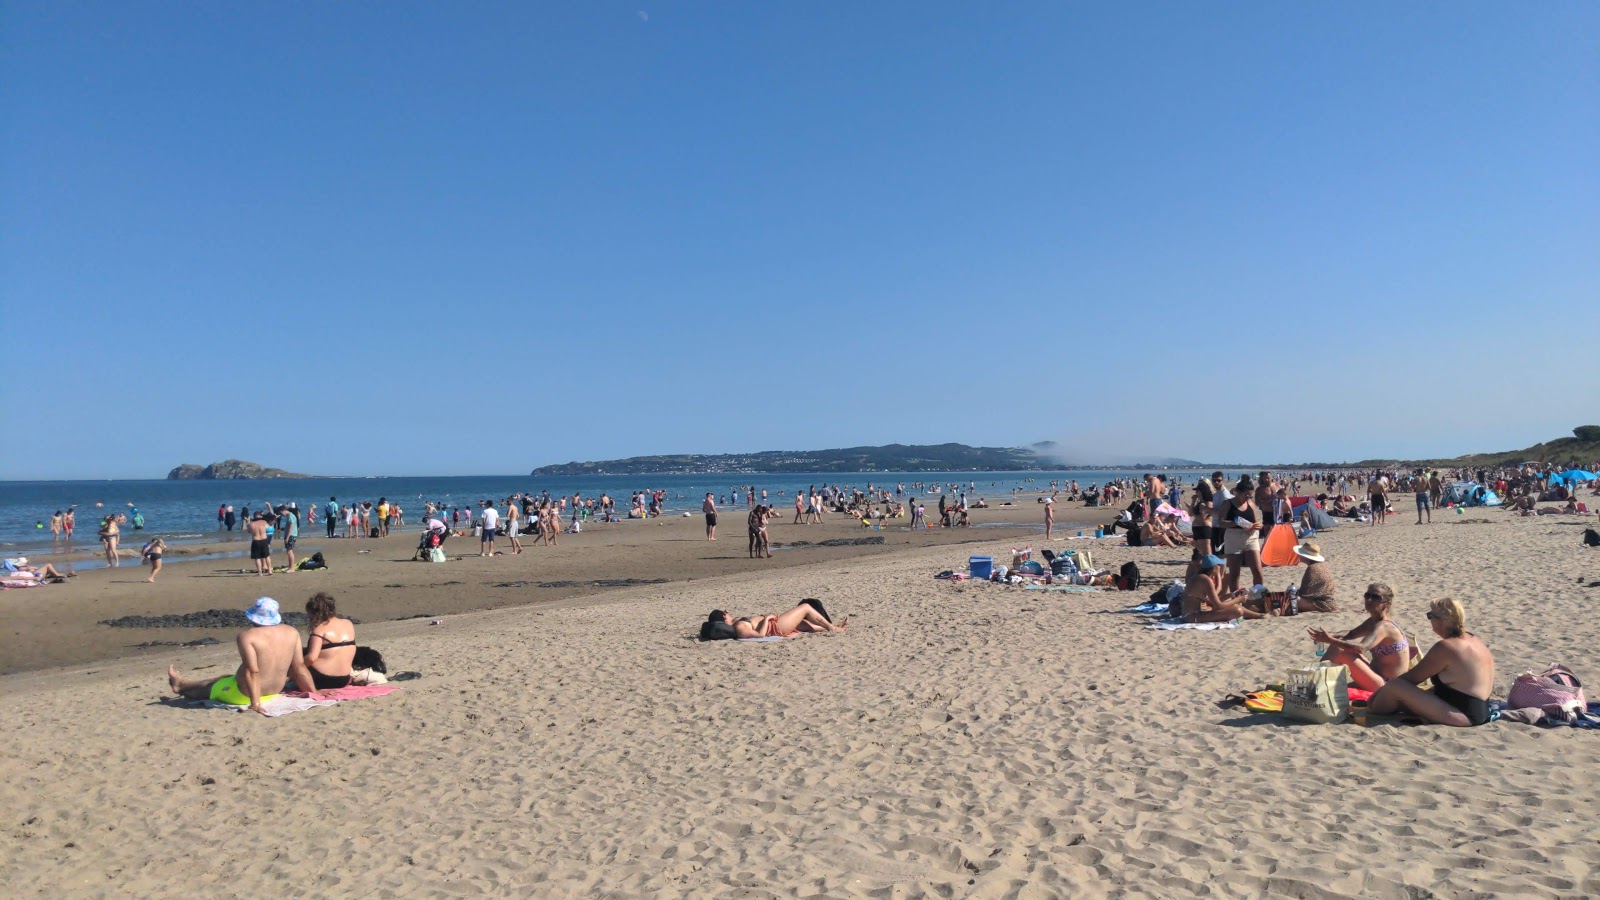 Foto de Portmarnock Beach - lugar popular entre os apreciadores de relaxamento